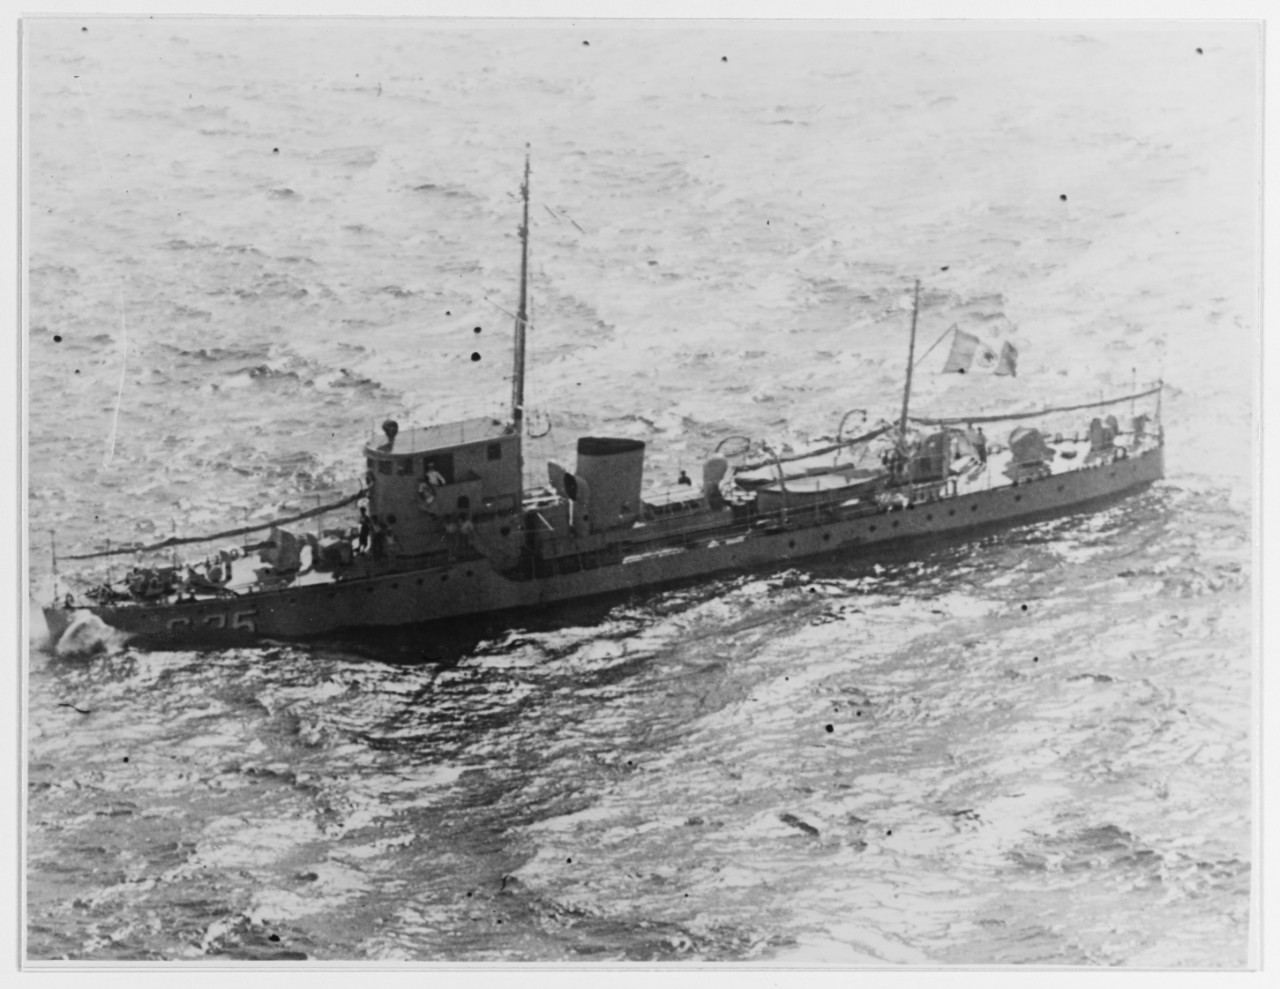 G-25 (Mexican patrol vessel, 1934-1956)